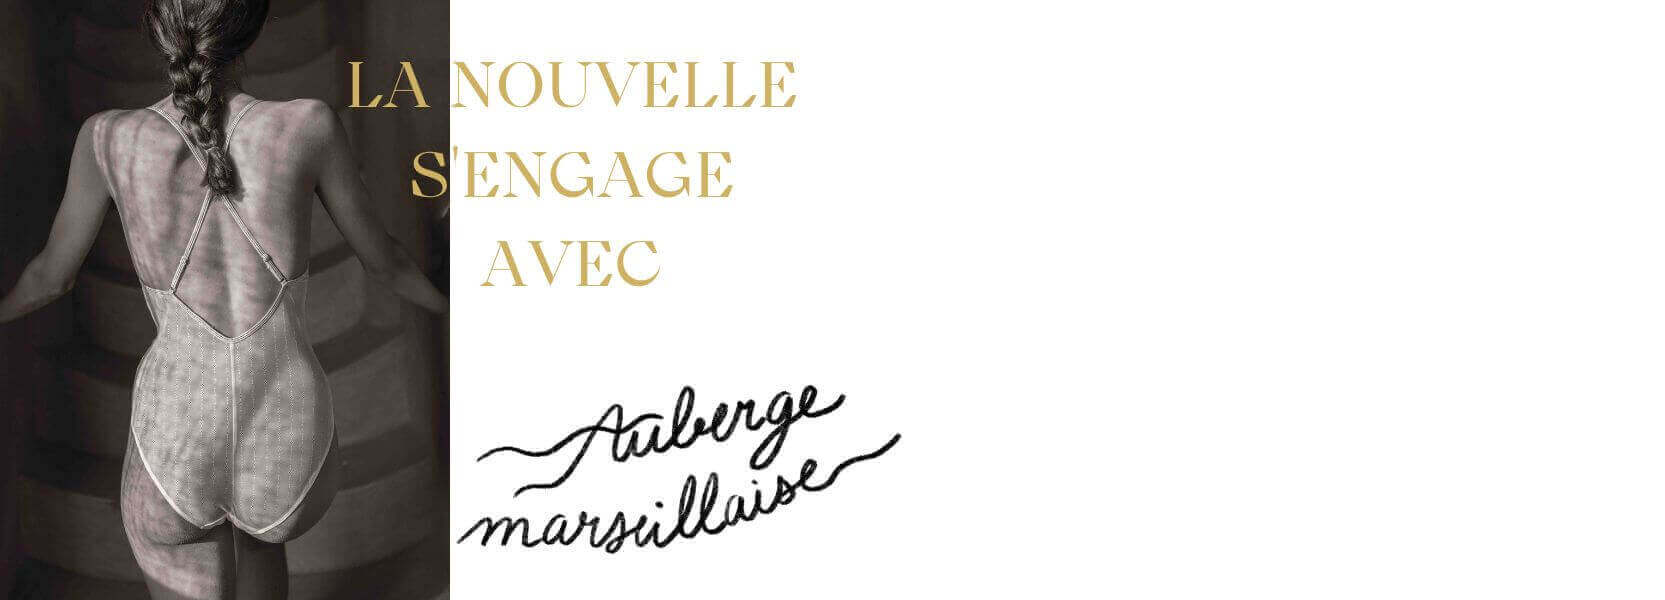 La Nouvelle and the Auberge Marseillaise